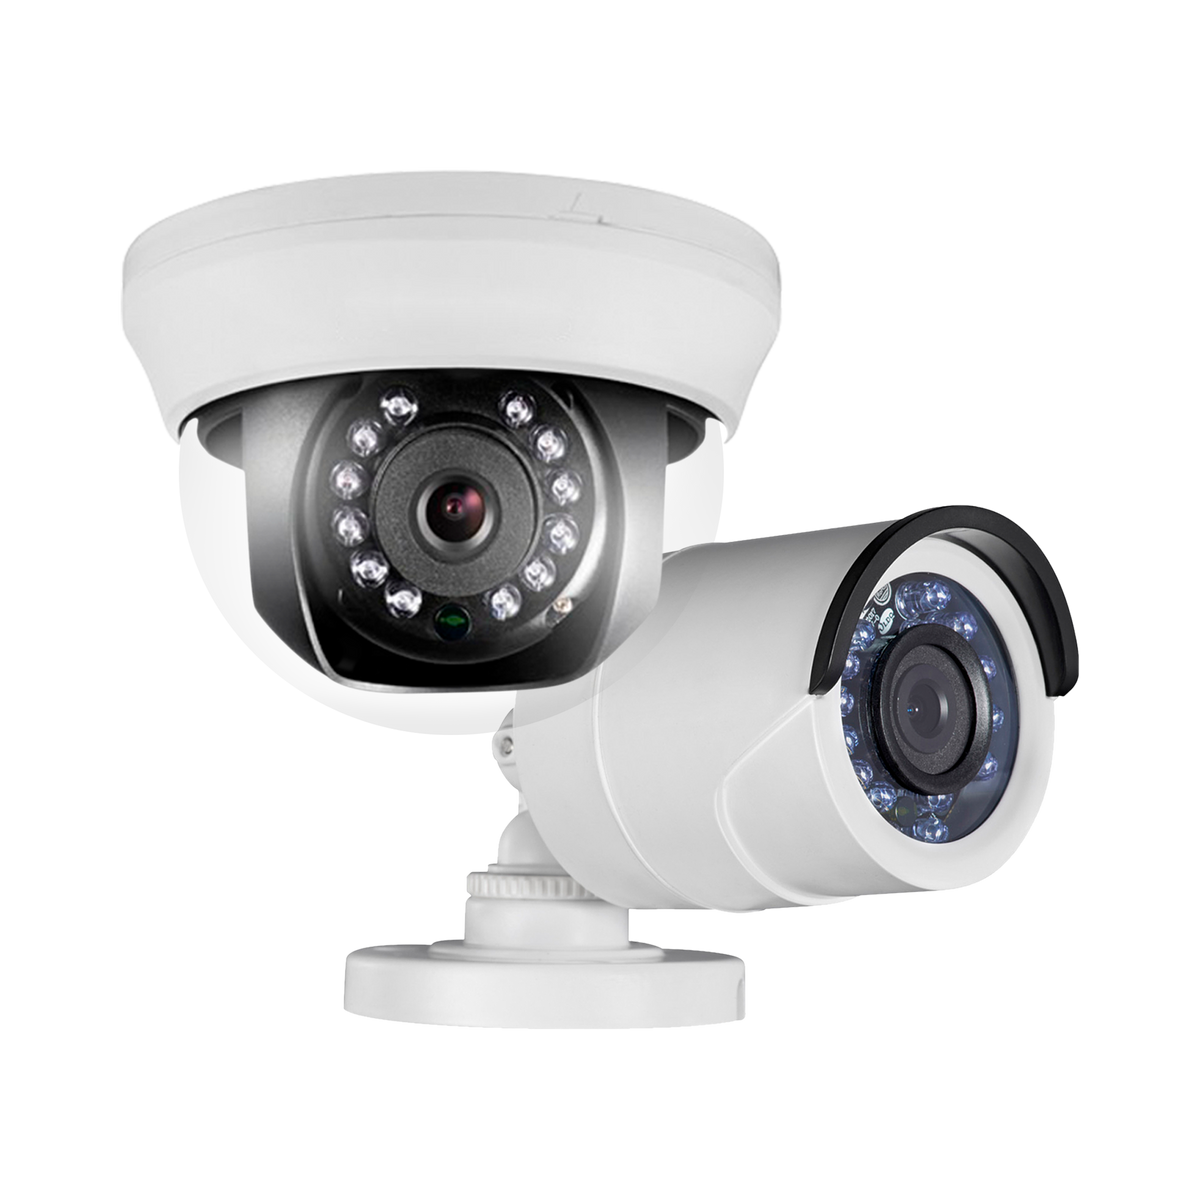 ESCONDIDA 700TVL – Camara de Seguridad UV8001BE CCTV – Camaras de Seguridad  Alta Definicion CCTV Colombia